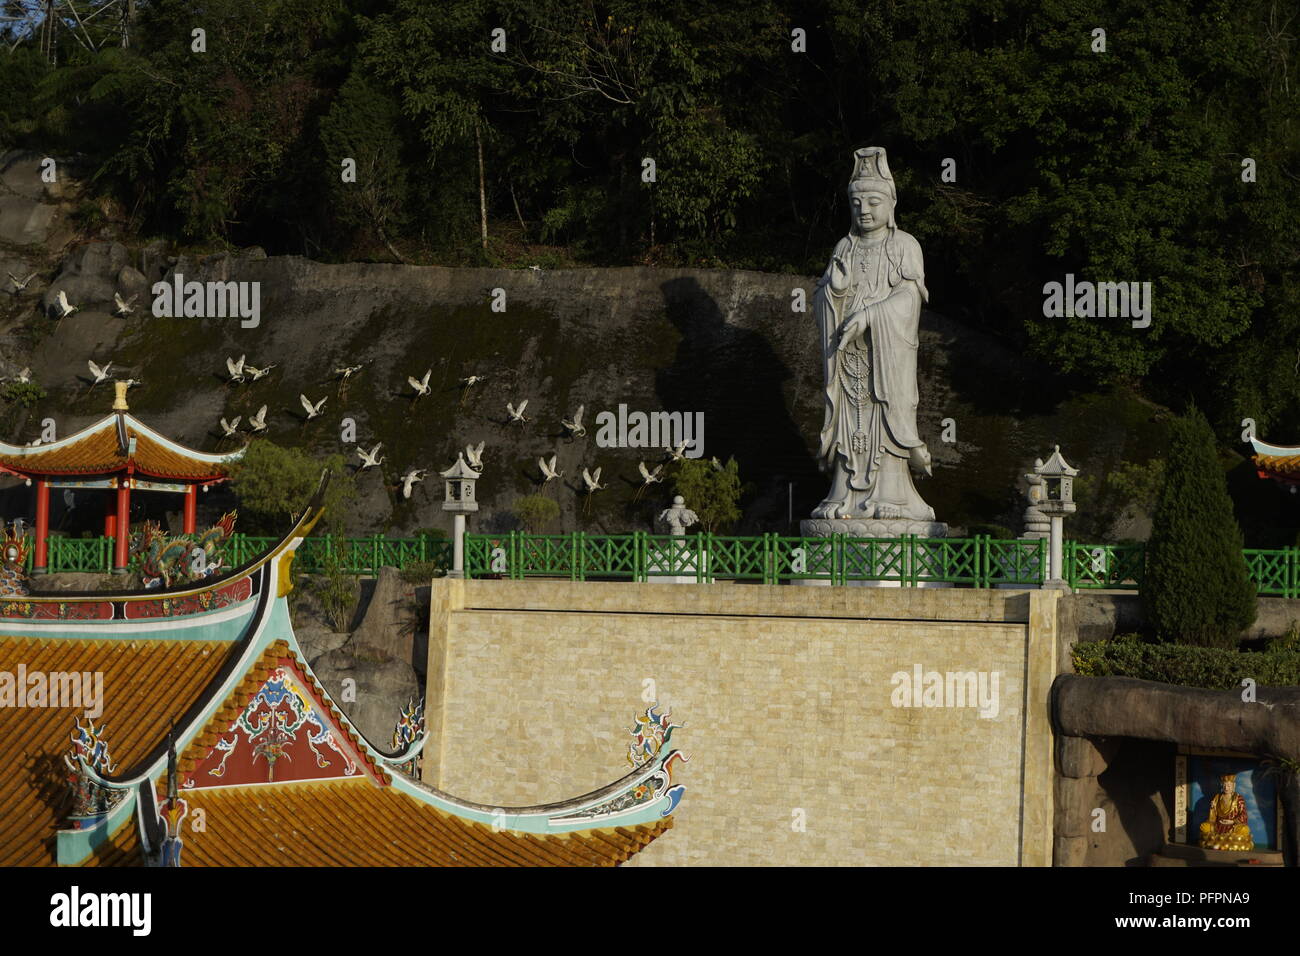 Yin guan -Fotos und -Bildmaterial in hoher Auflösung – Alamy